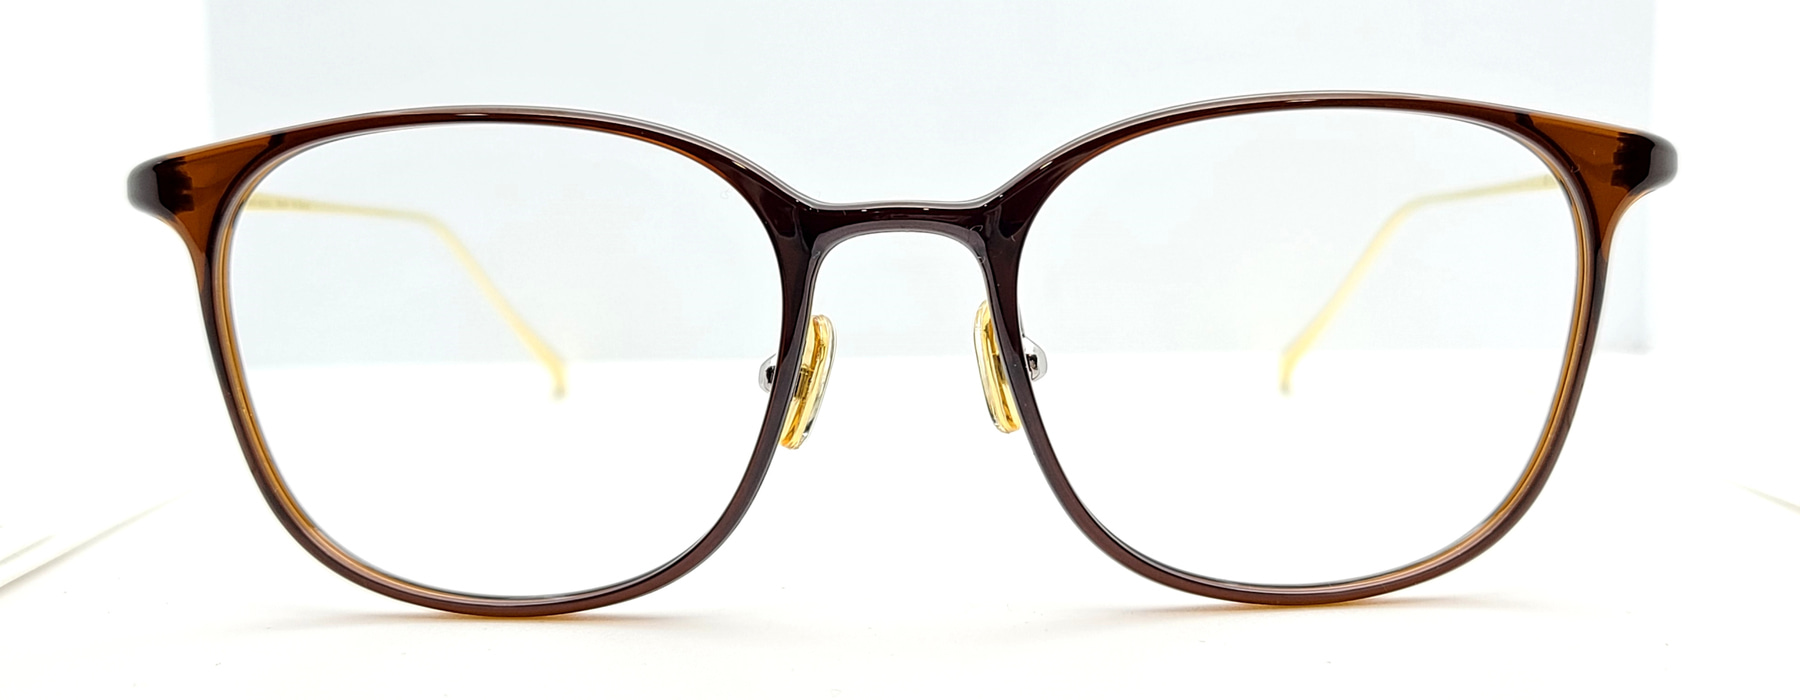 MINIHOUSE M-1430, Korean glasses, sunglasses, eyeglasses, glasses